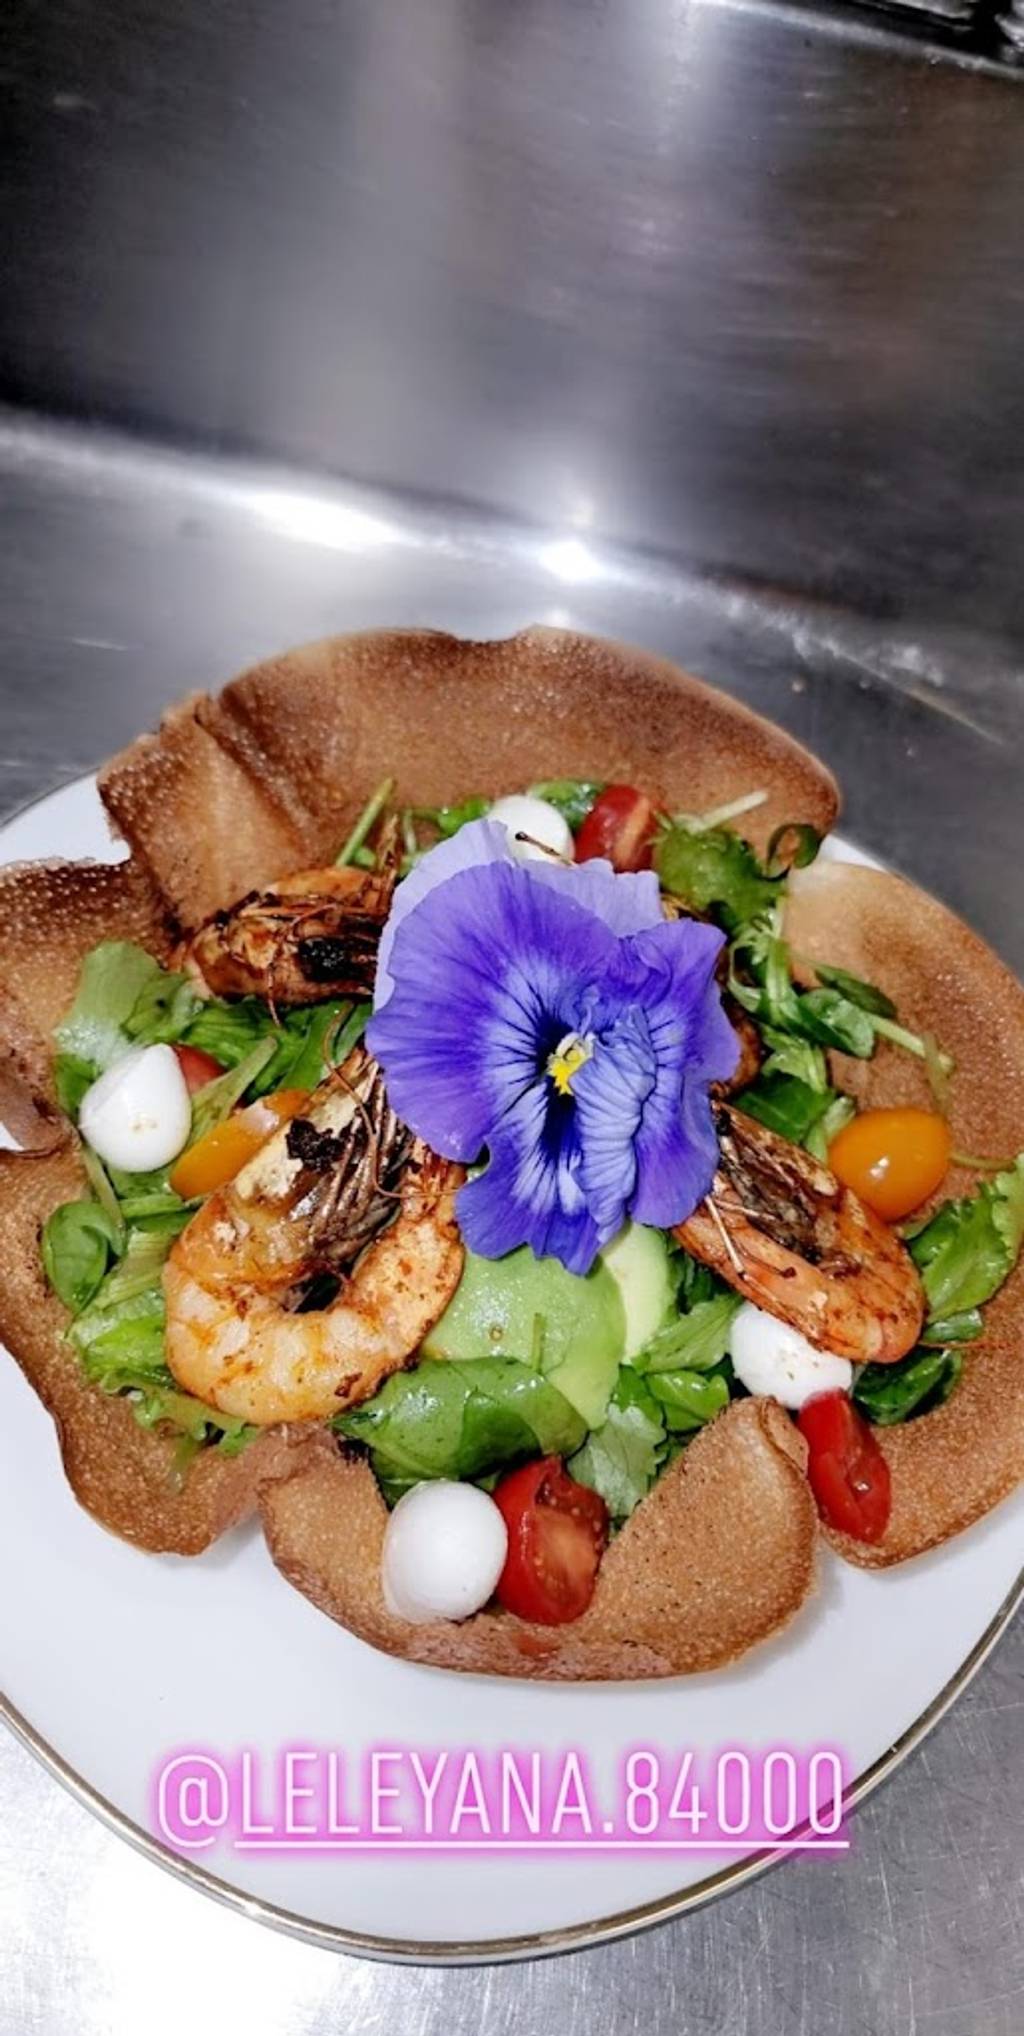 Le Leyana restaurant & brunch Avignon - Food Tableware Flower Ingredient Recipe